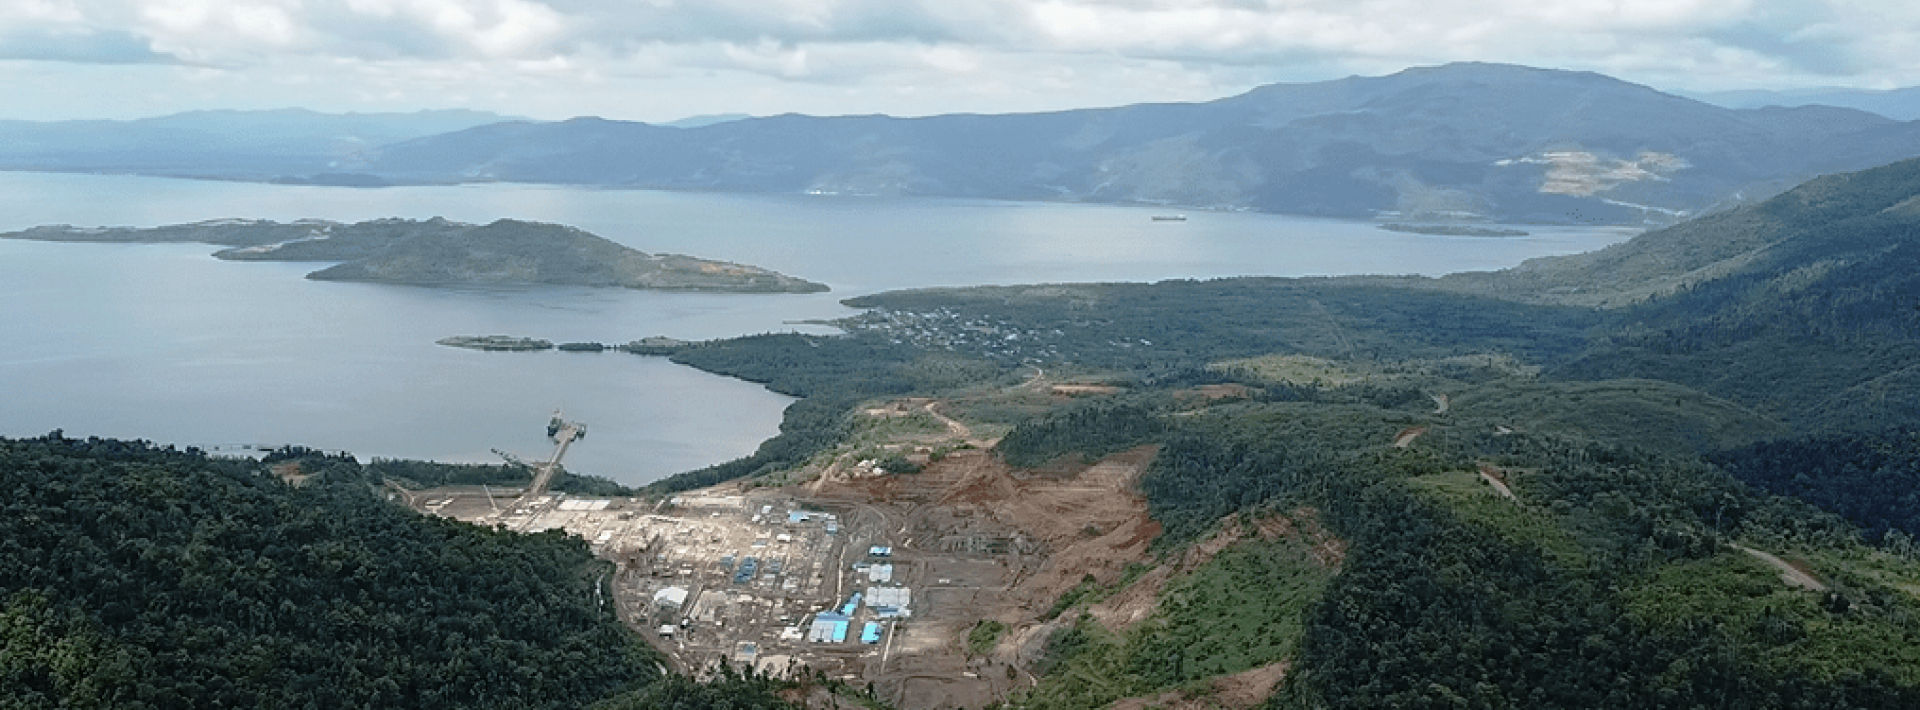 Aerial view of mine site in Halmahera